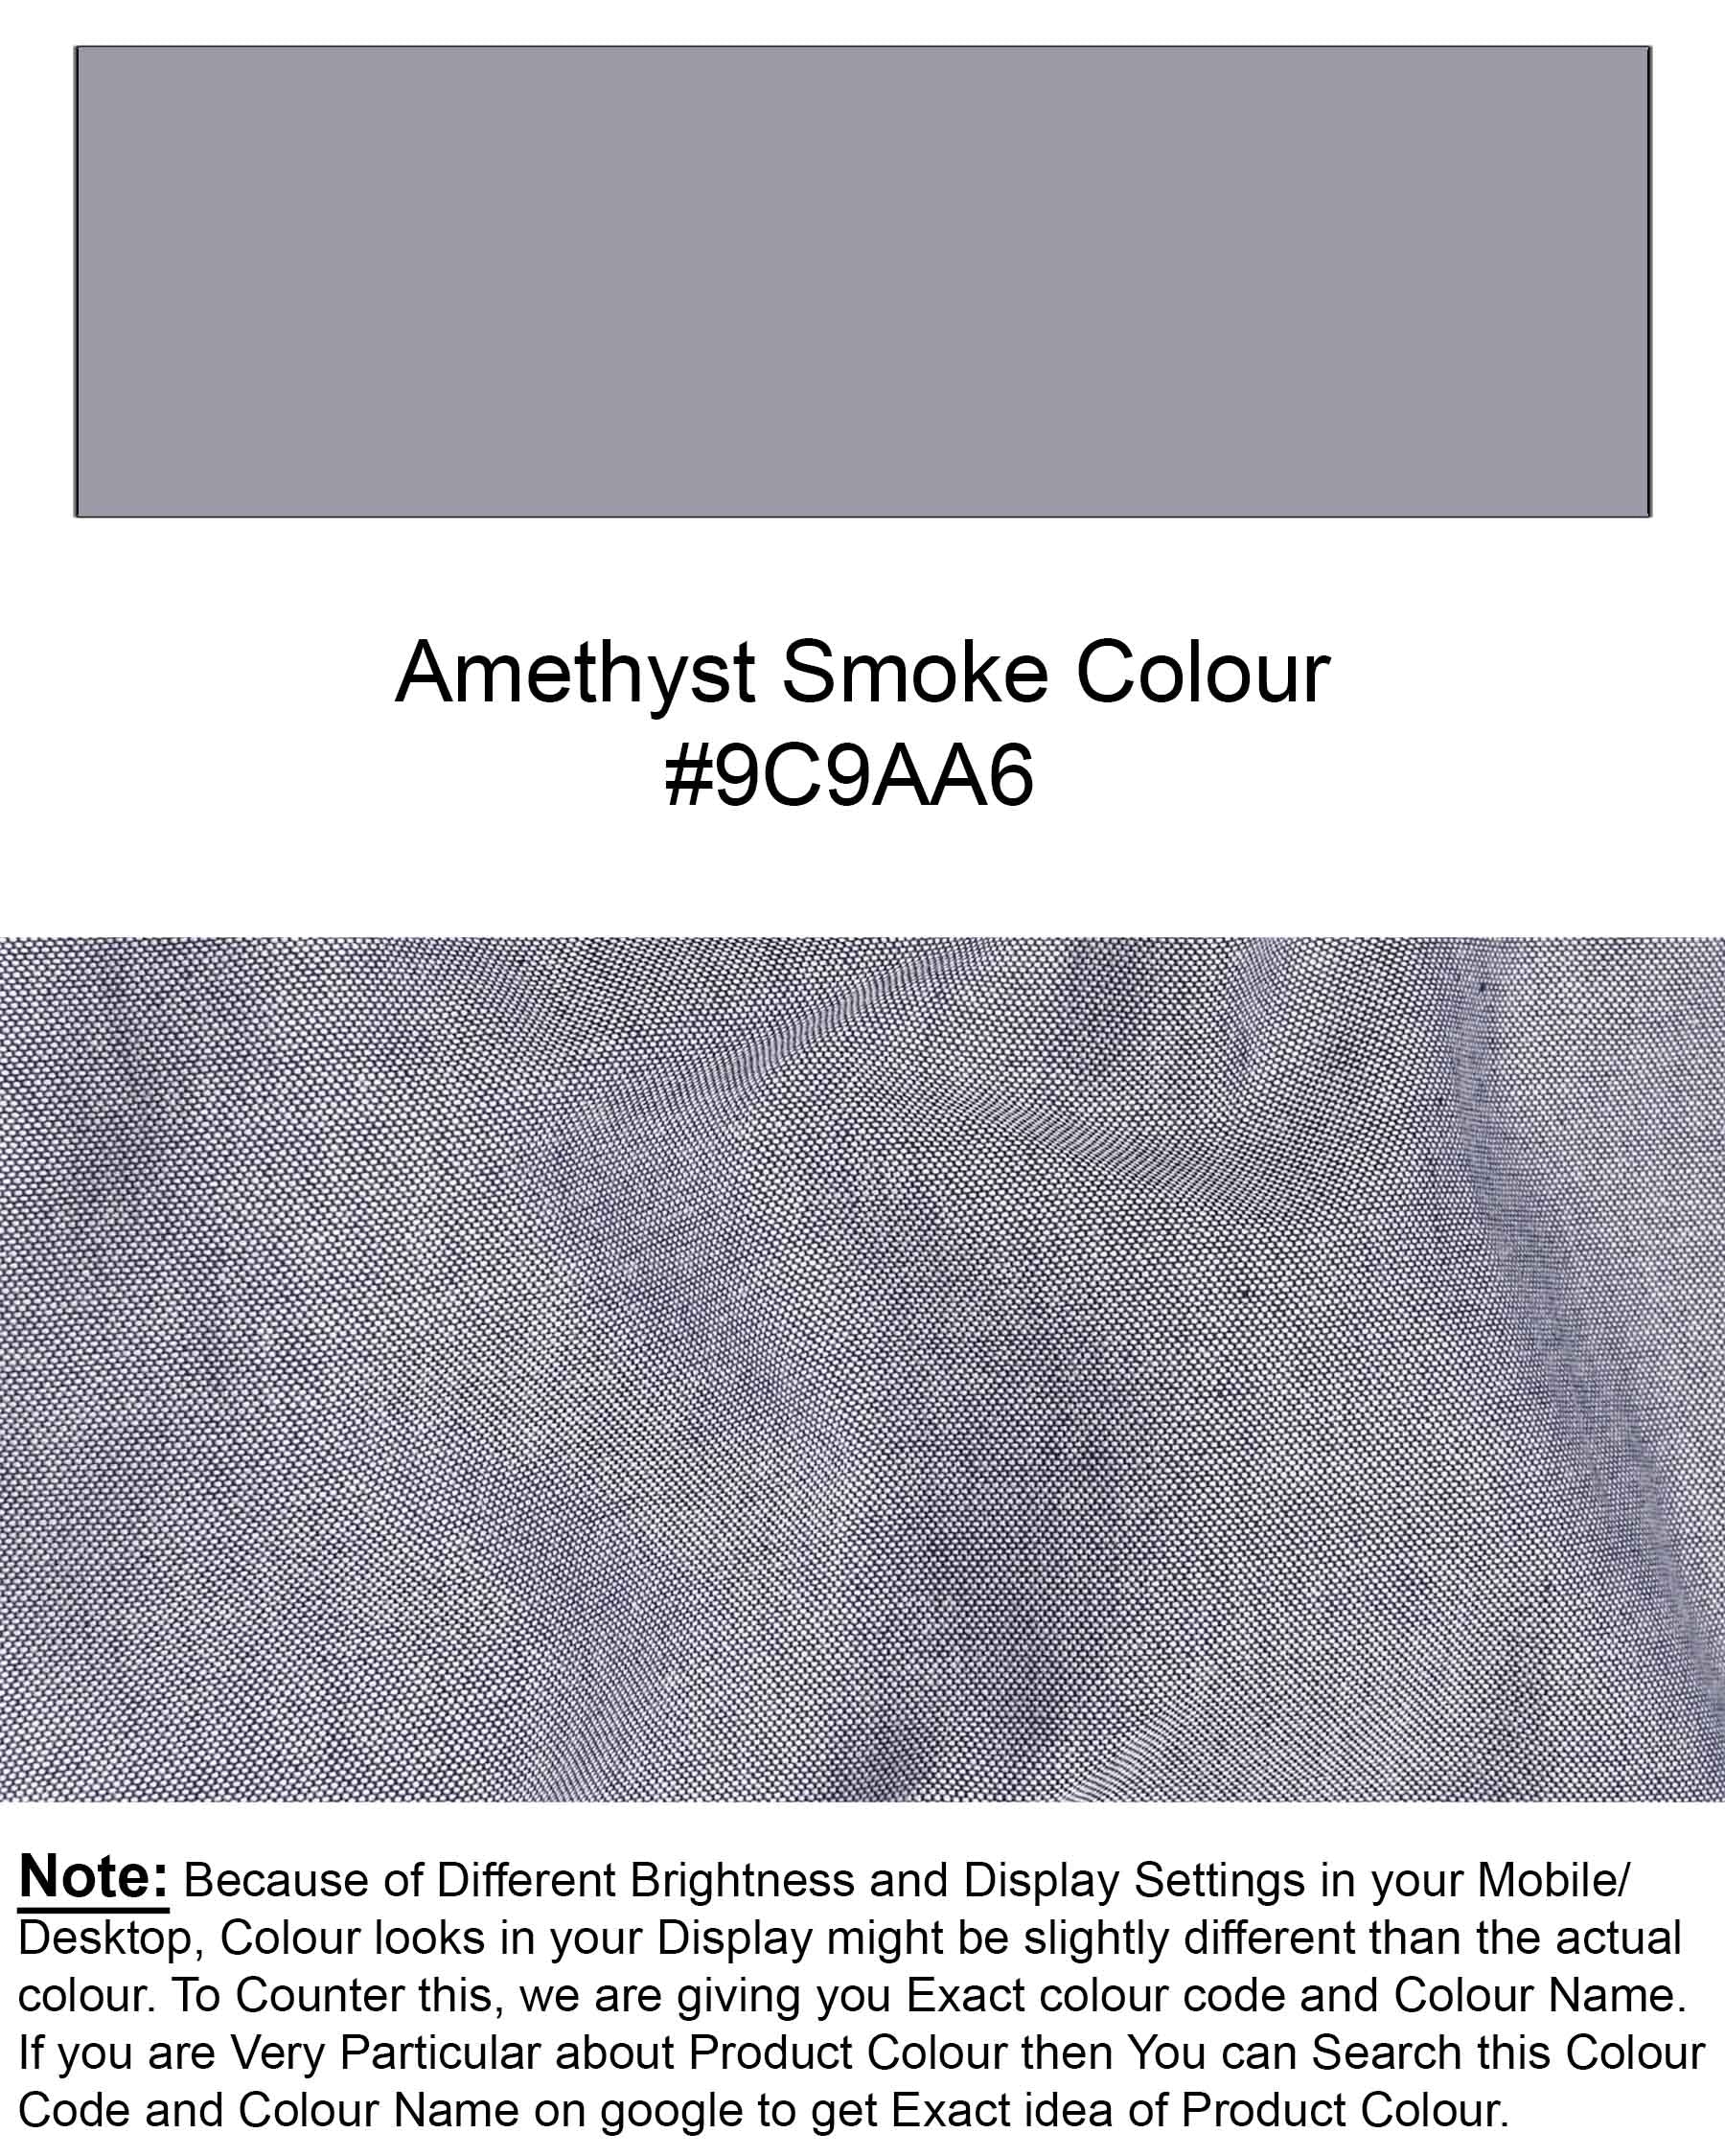 Amethyst Smoke Gray Royal Oxford Shirt  7454-BD-BLE-38, 7454-BD-BLE-H-38, 7454-BD-BLE-39, 7454-BD-BLE-H-39, 7454-BD-BLE-40, 7454-BD-BLE-H-40, 7454-BD-BLE-42, 7454-BD-BLE-H-42, 7454-BD-BLE-44, 7454-BD-BLE-H-44, 7454-BD-BLE-46, 7454-BD-BLE-H-46, 7454-BD-BLE-48, 7454-BD-BLE-H-48, 7454-BD-BLE-50, 7454-BD-BLE-H-50, 7454-BD-BLE-52, 7454-BD-BLE-H-52